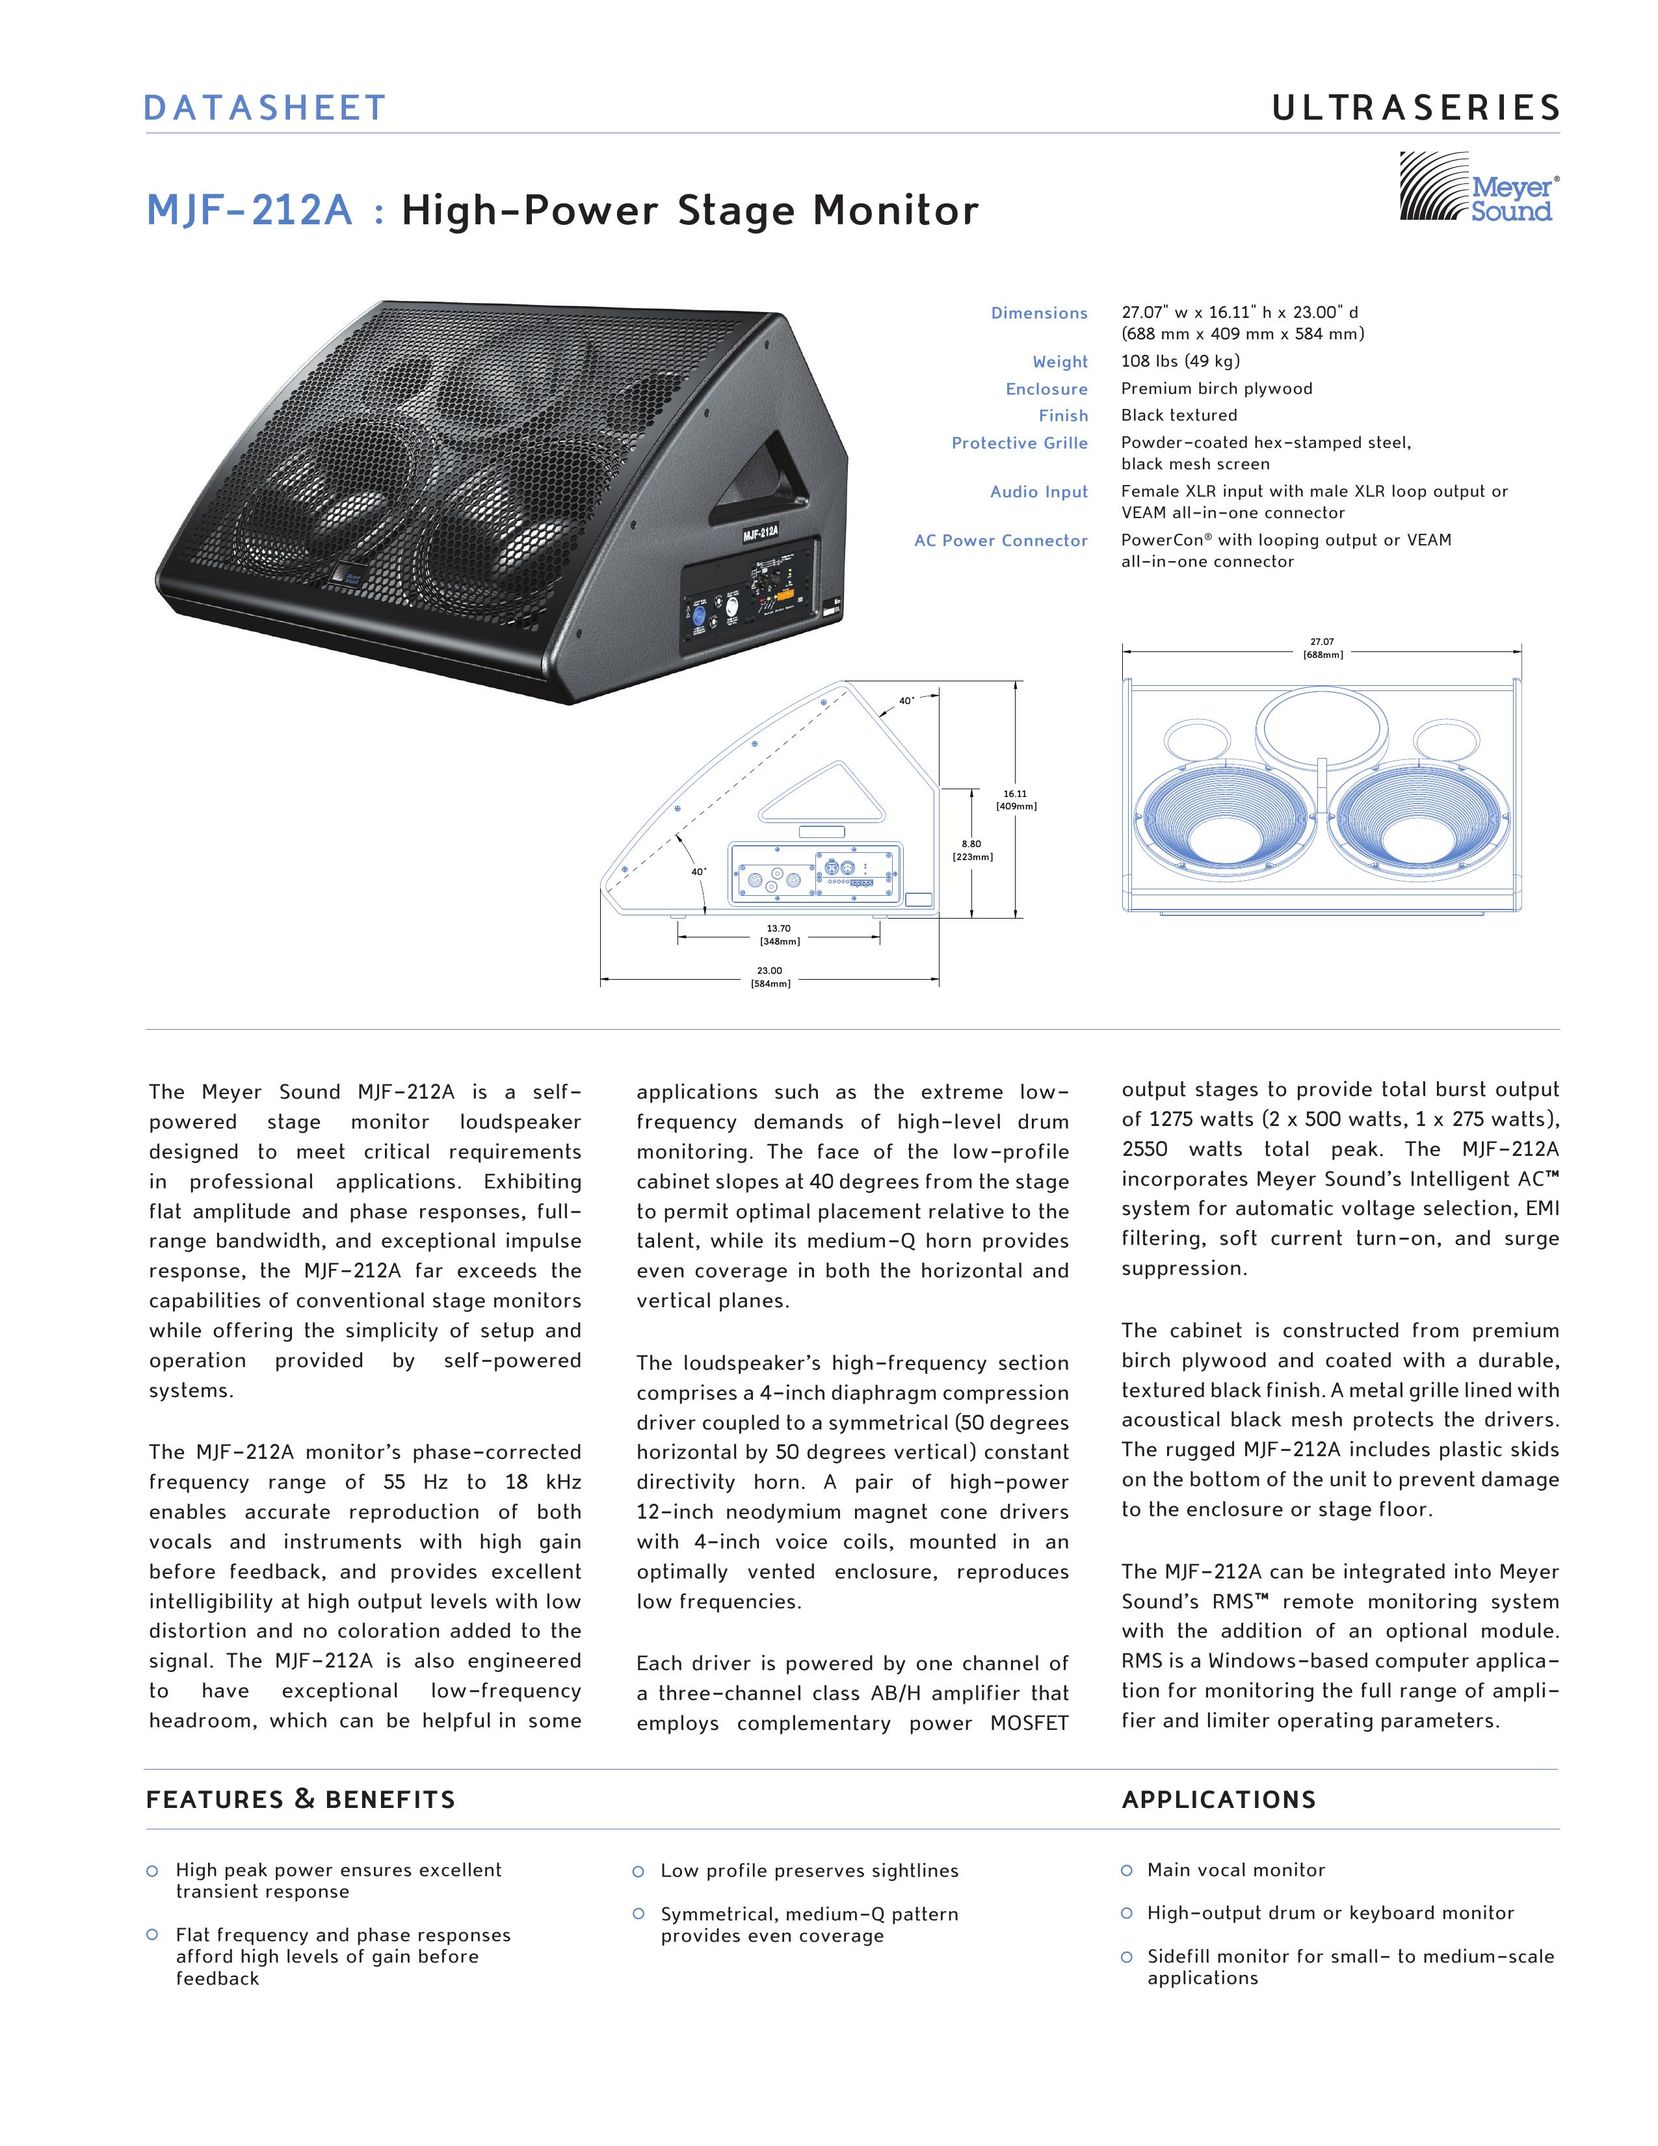 Meyer Sound MJF-212A Speaker User Manual